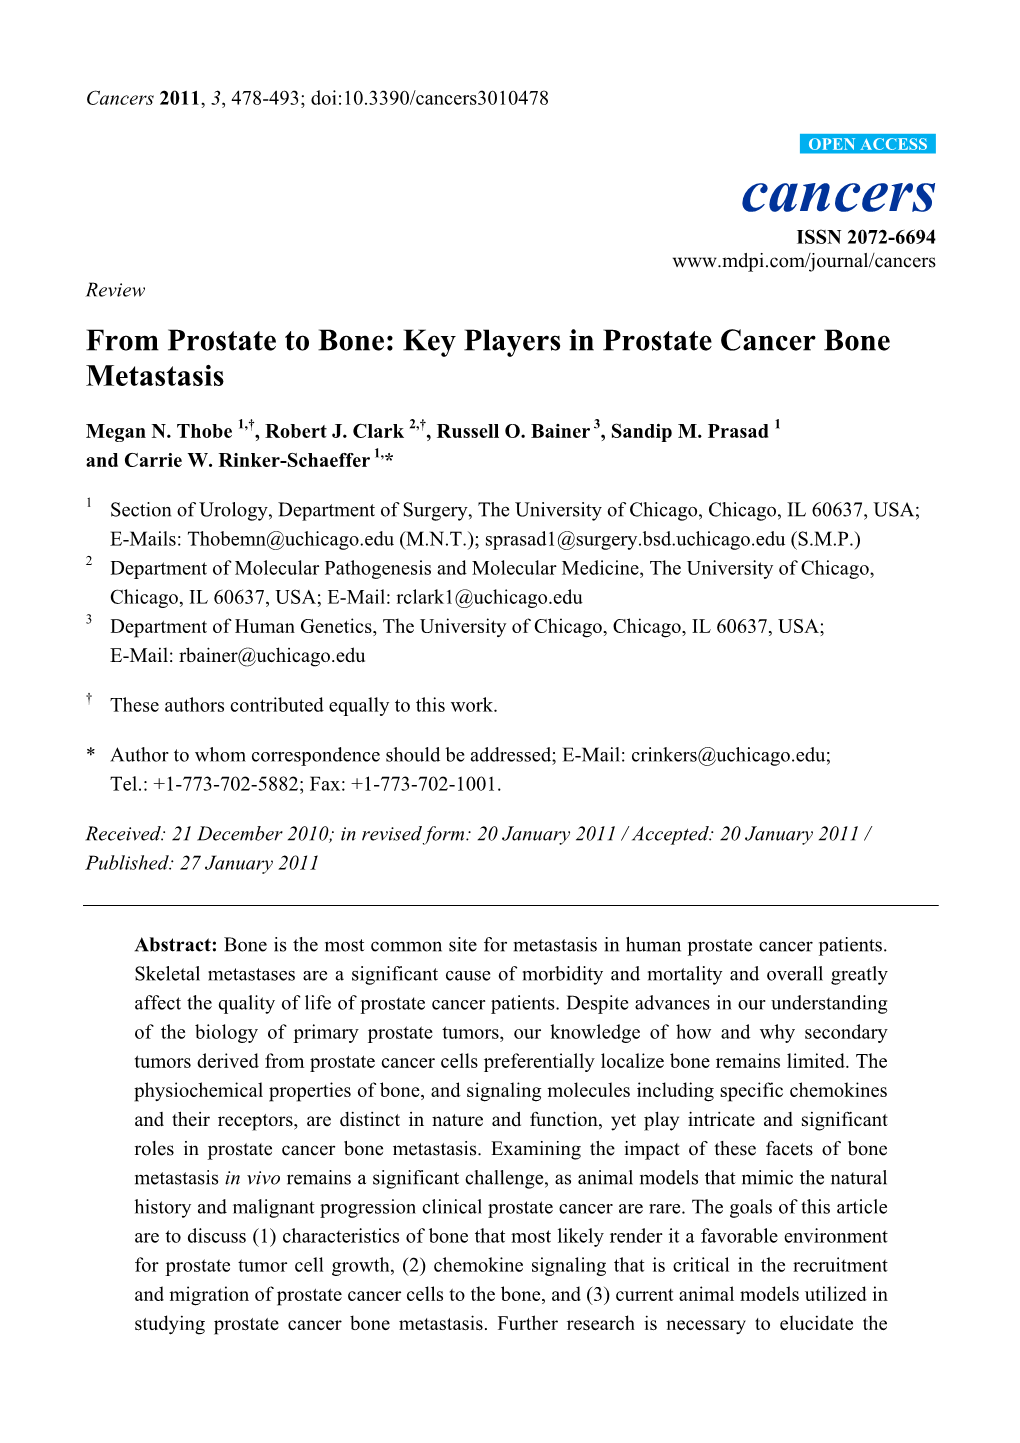 Key Players in Prostate Cancer Bone Metastasis